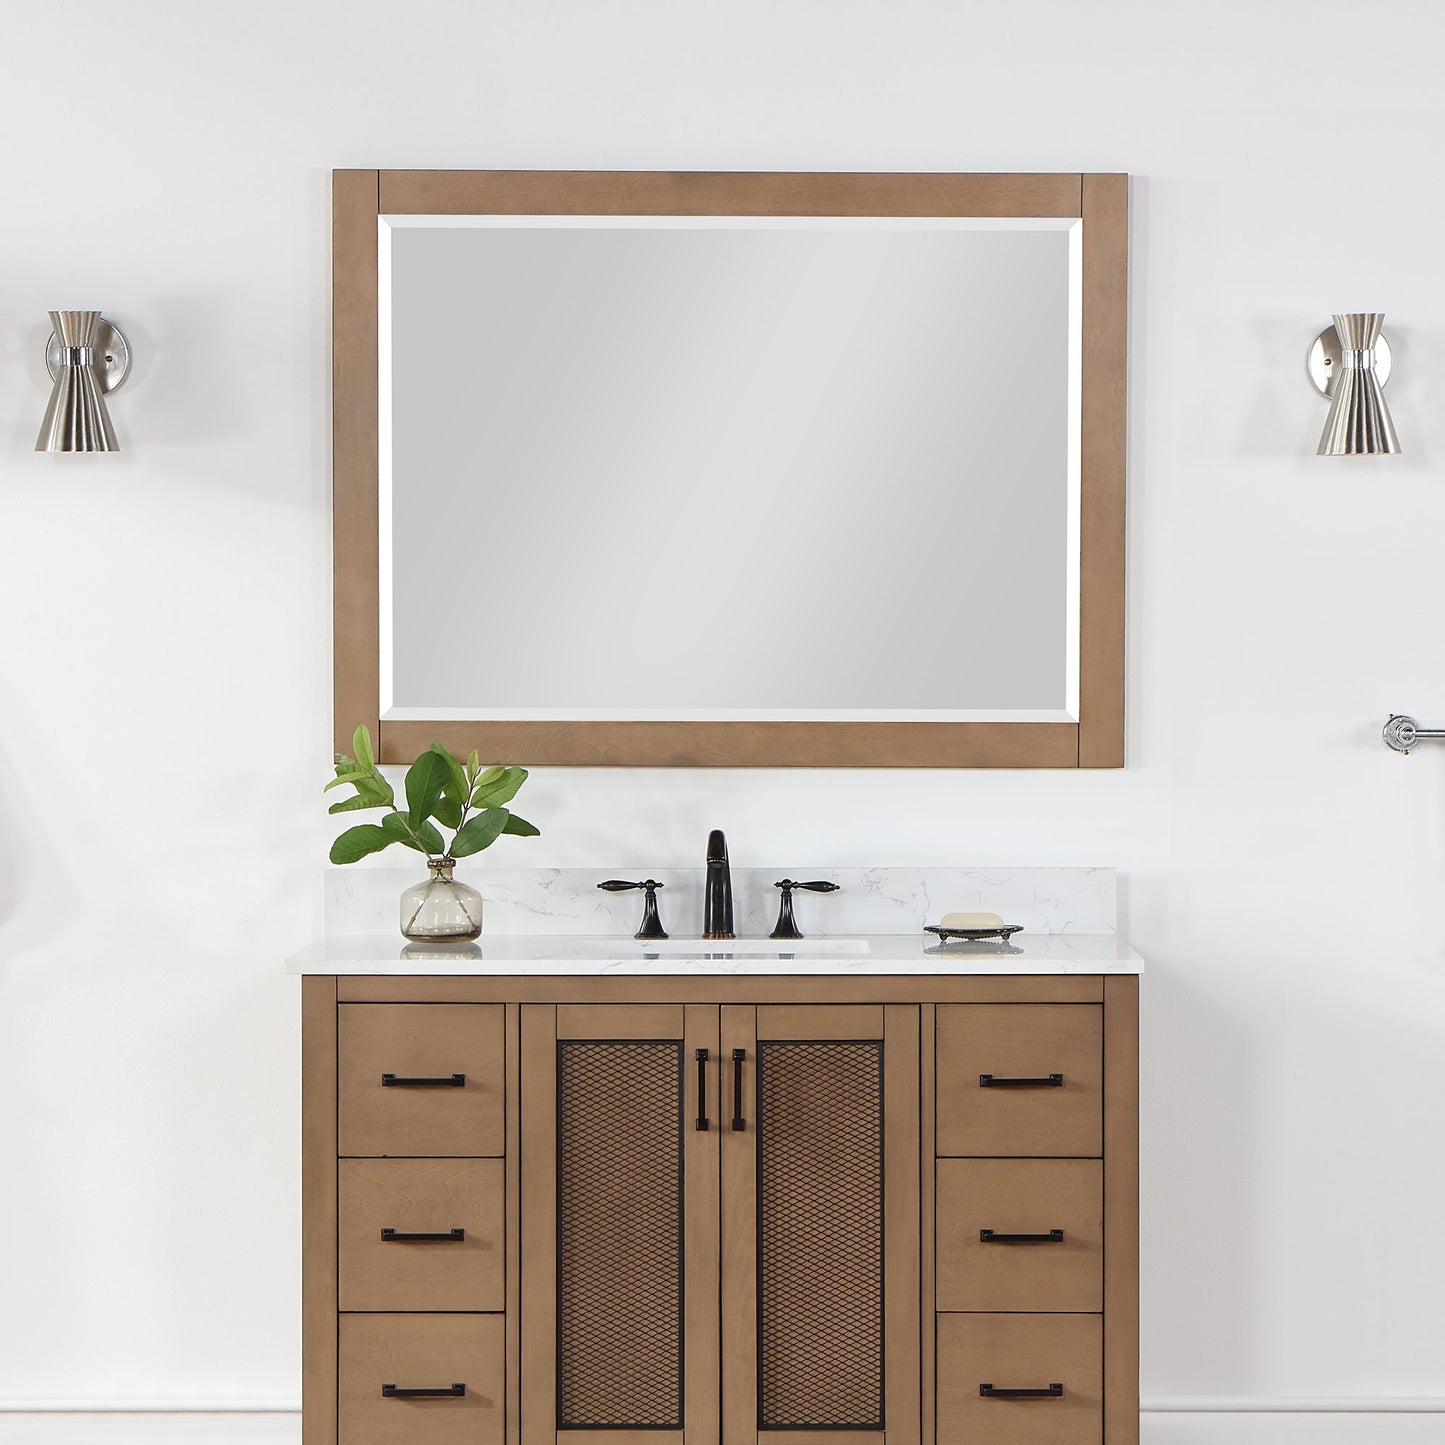 Ivy 48" Rectangular Bathroom Wood Framed Wall Mirror in Brown Pine